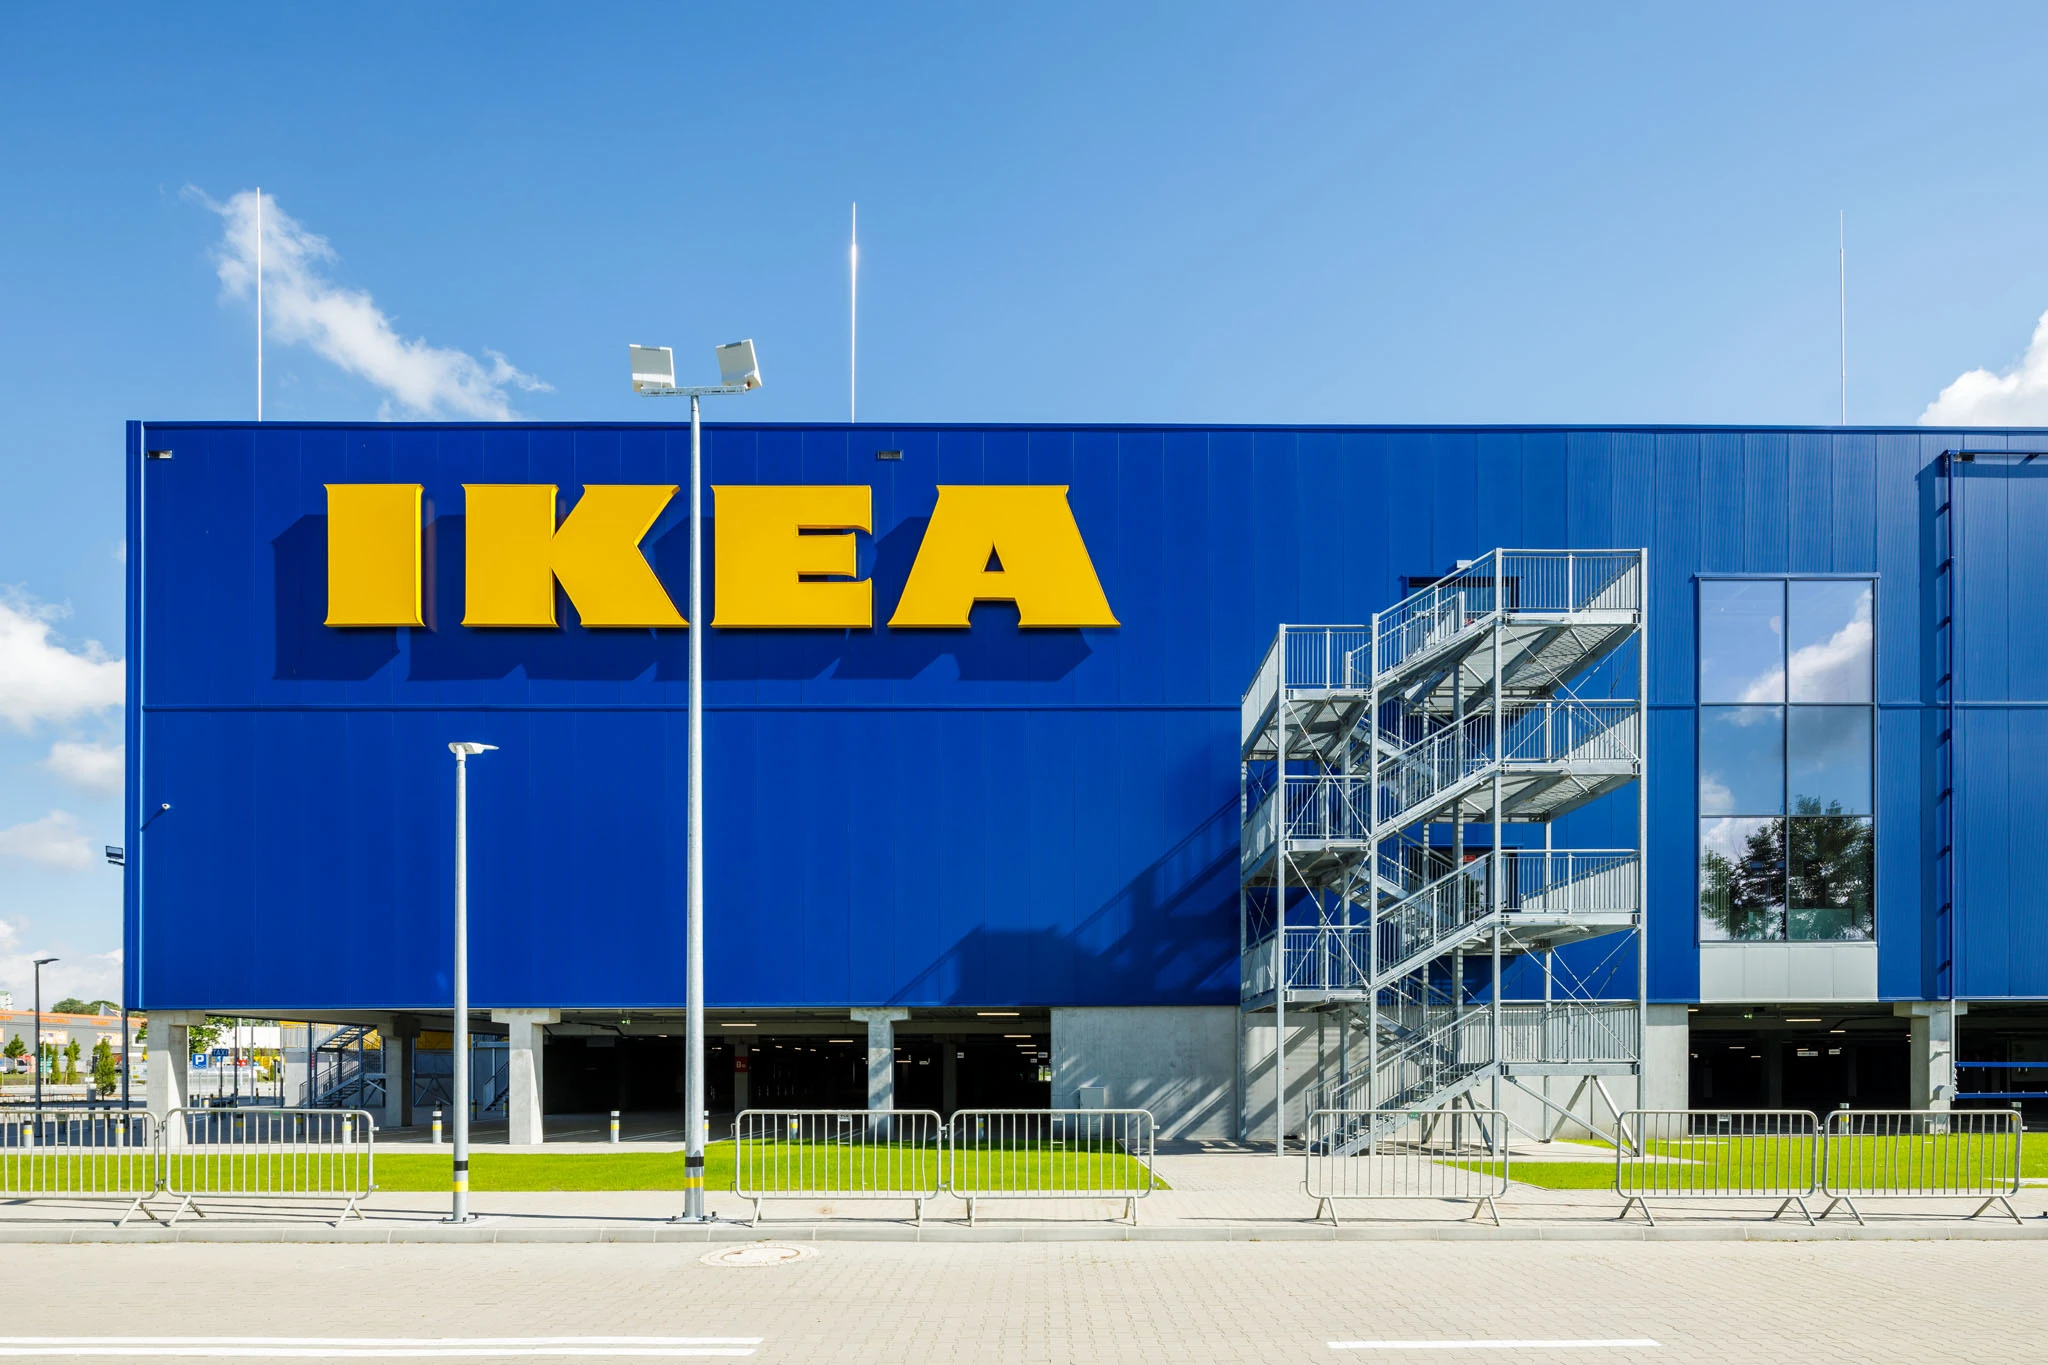 IKEA SZCZECIN RETAIL CENTER